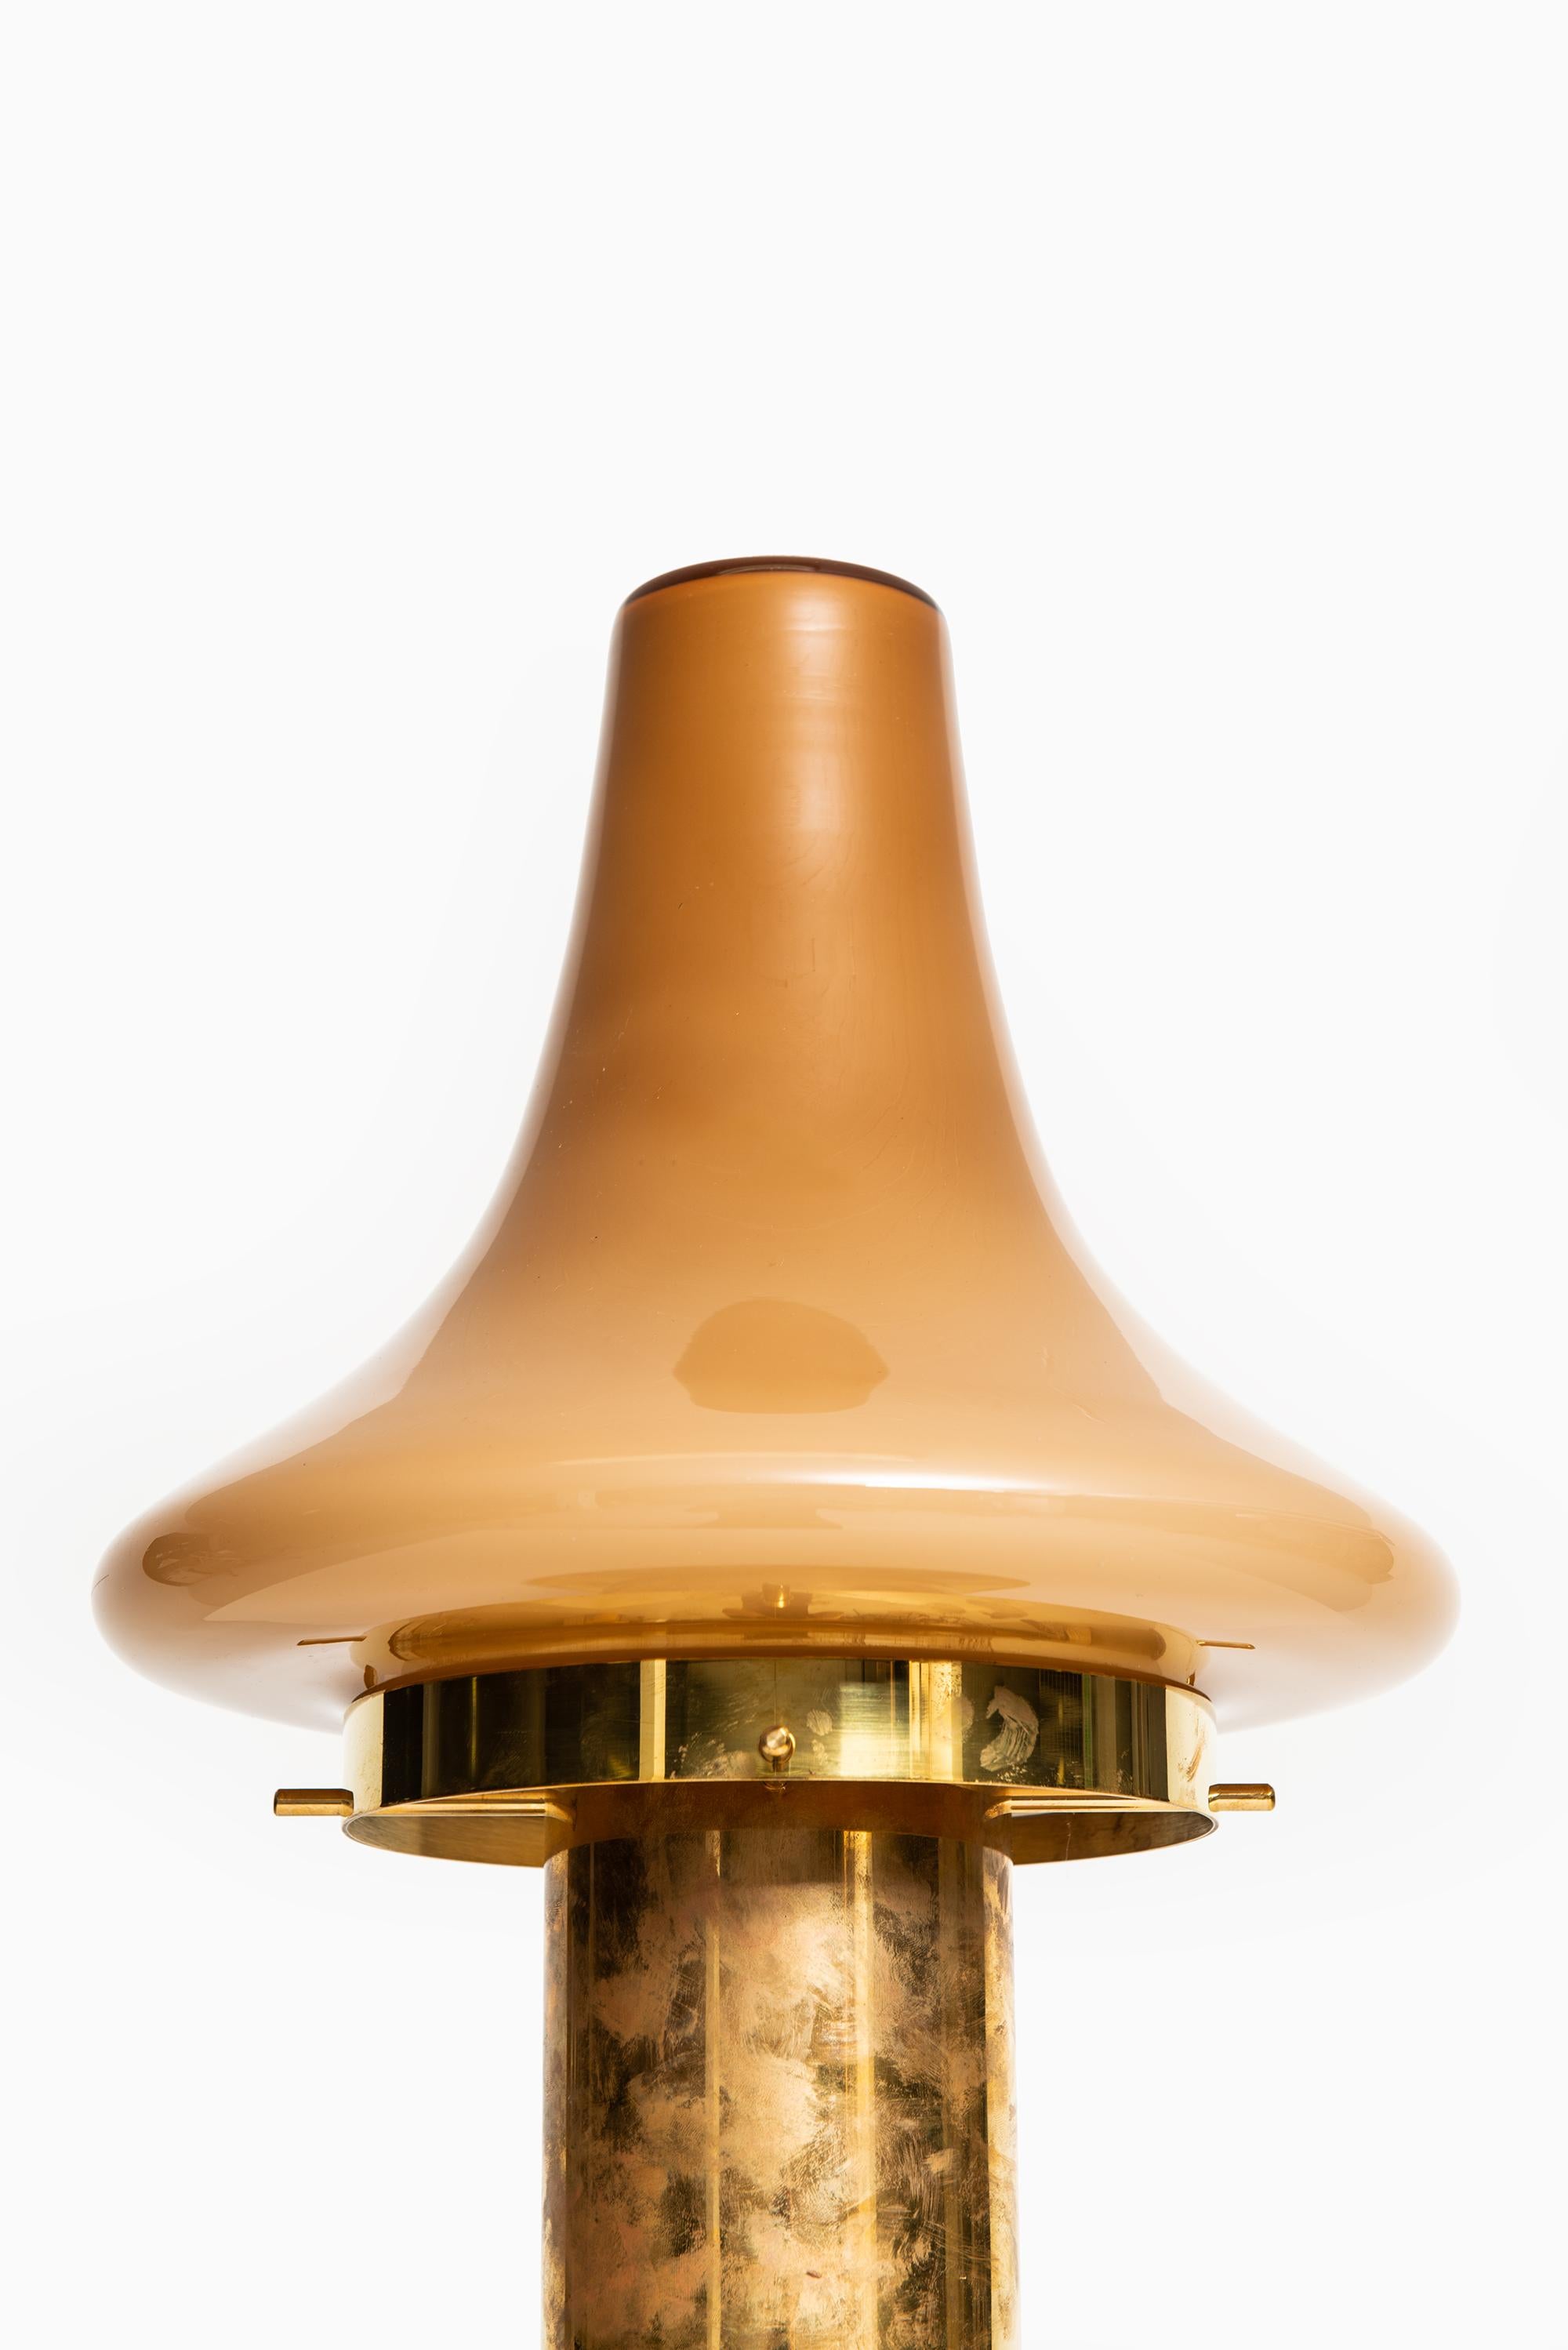 Scandinavian Modern Hans-Agne Jakobsson Table Lamp Produced by Hans-Agne Jakobsson AB in Sweden